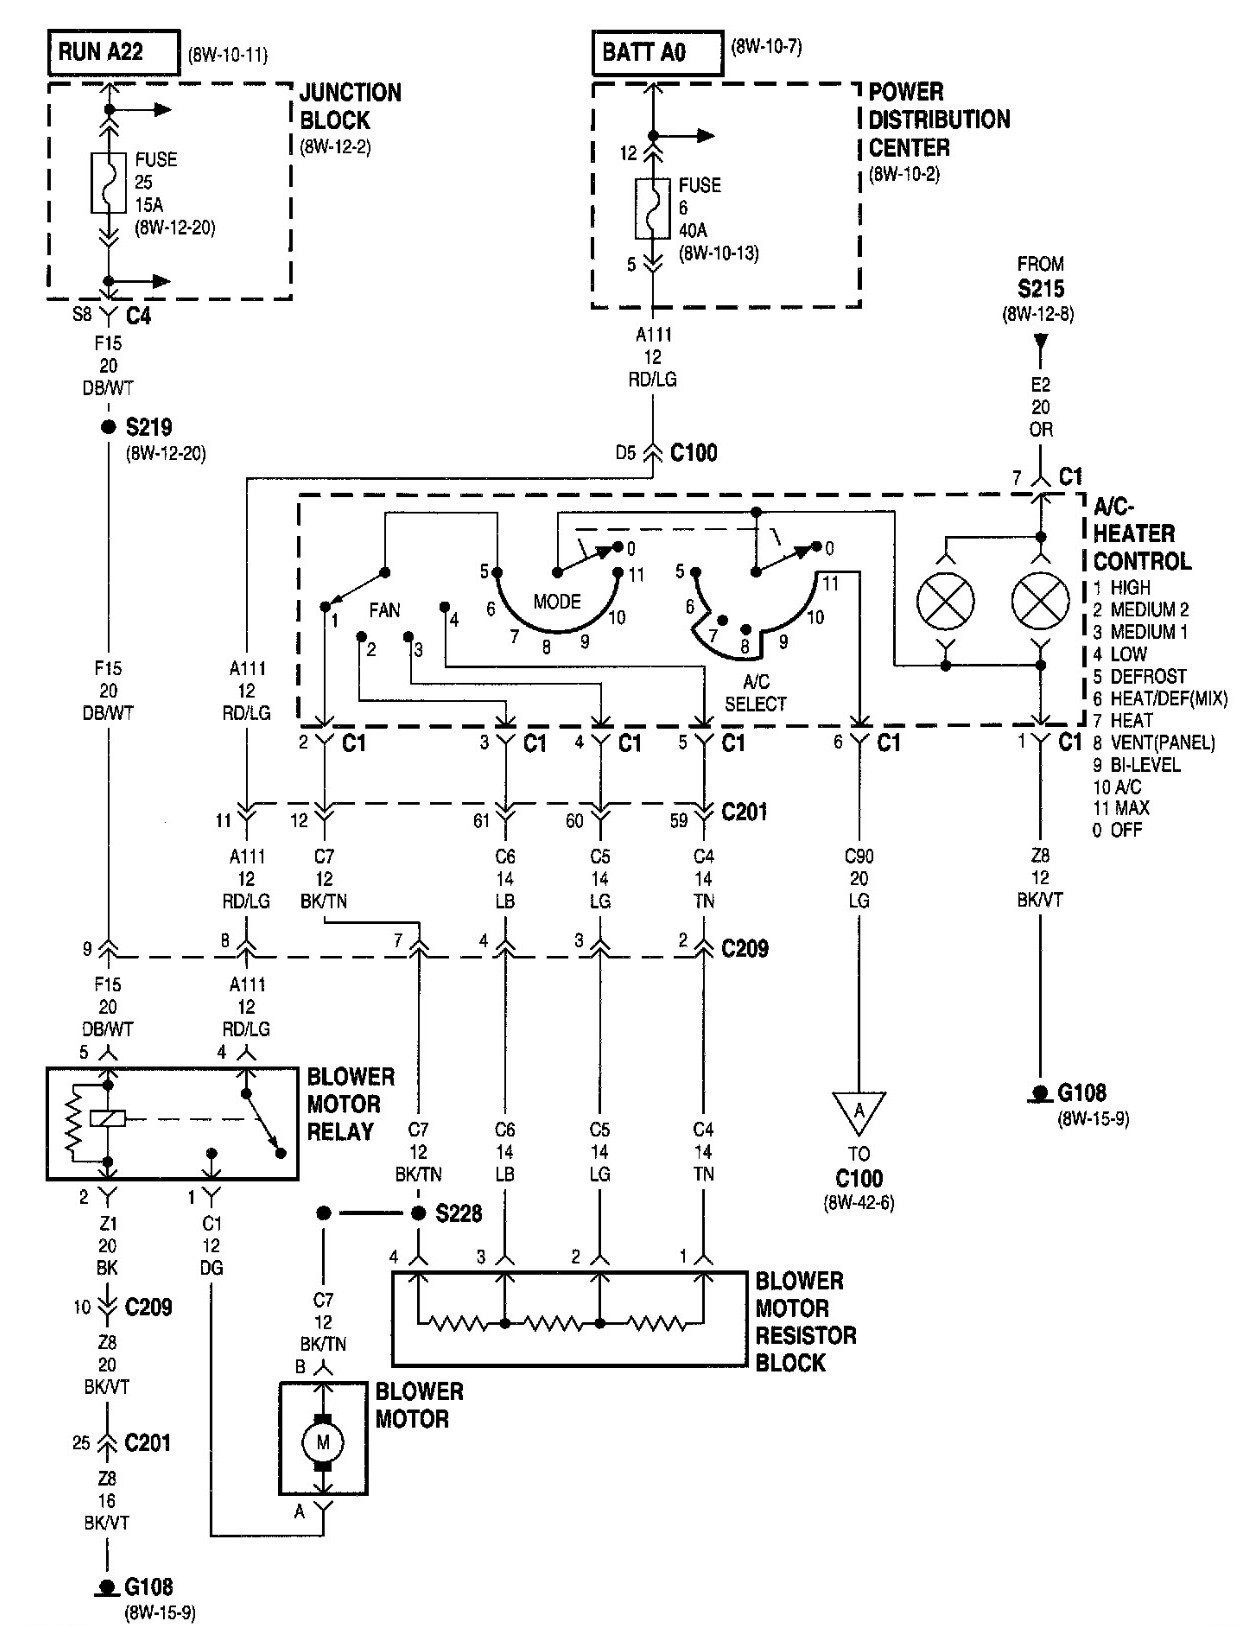 Honda F22 Engine Diagram Honda B18 Engine Diagram Honda Wiring Diagrams Instructions Of Honda F22 Engine Diagram